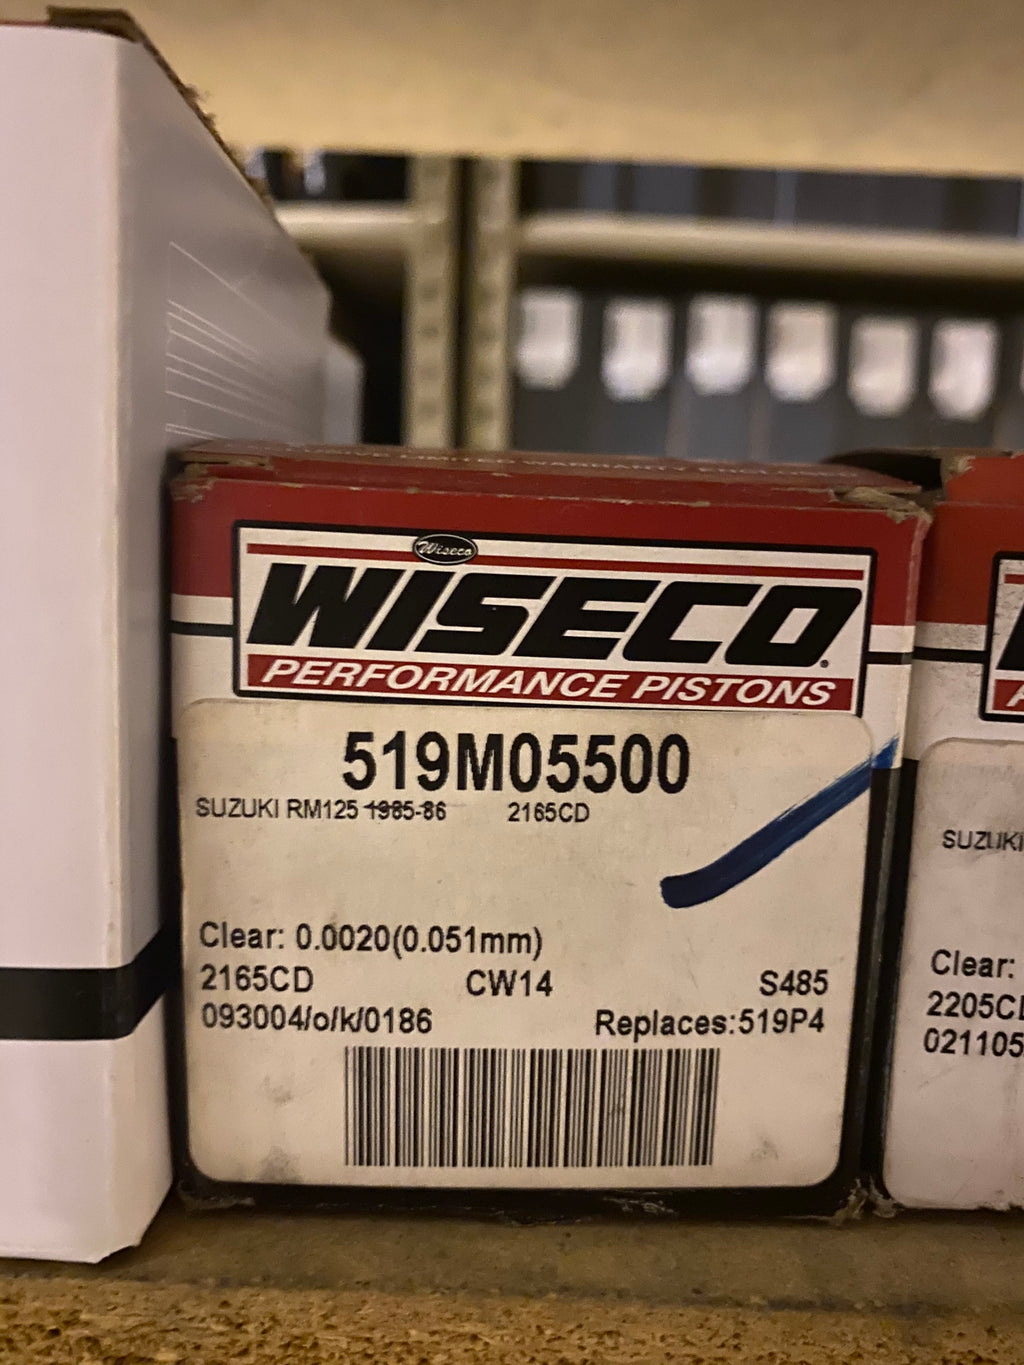 Wiseco Piston Kit 519M05500 Suzuki RM125 1985-86 2165CD